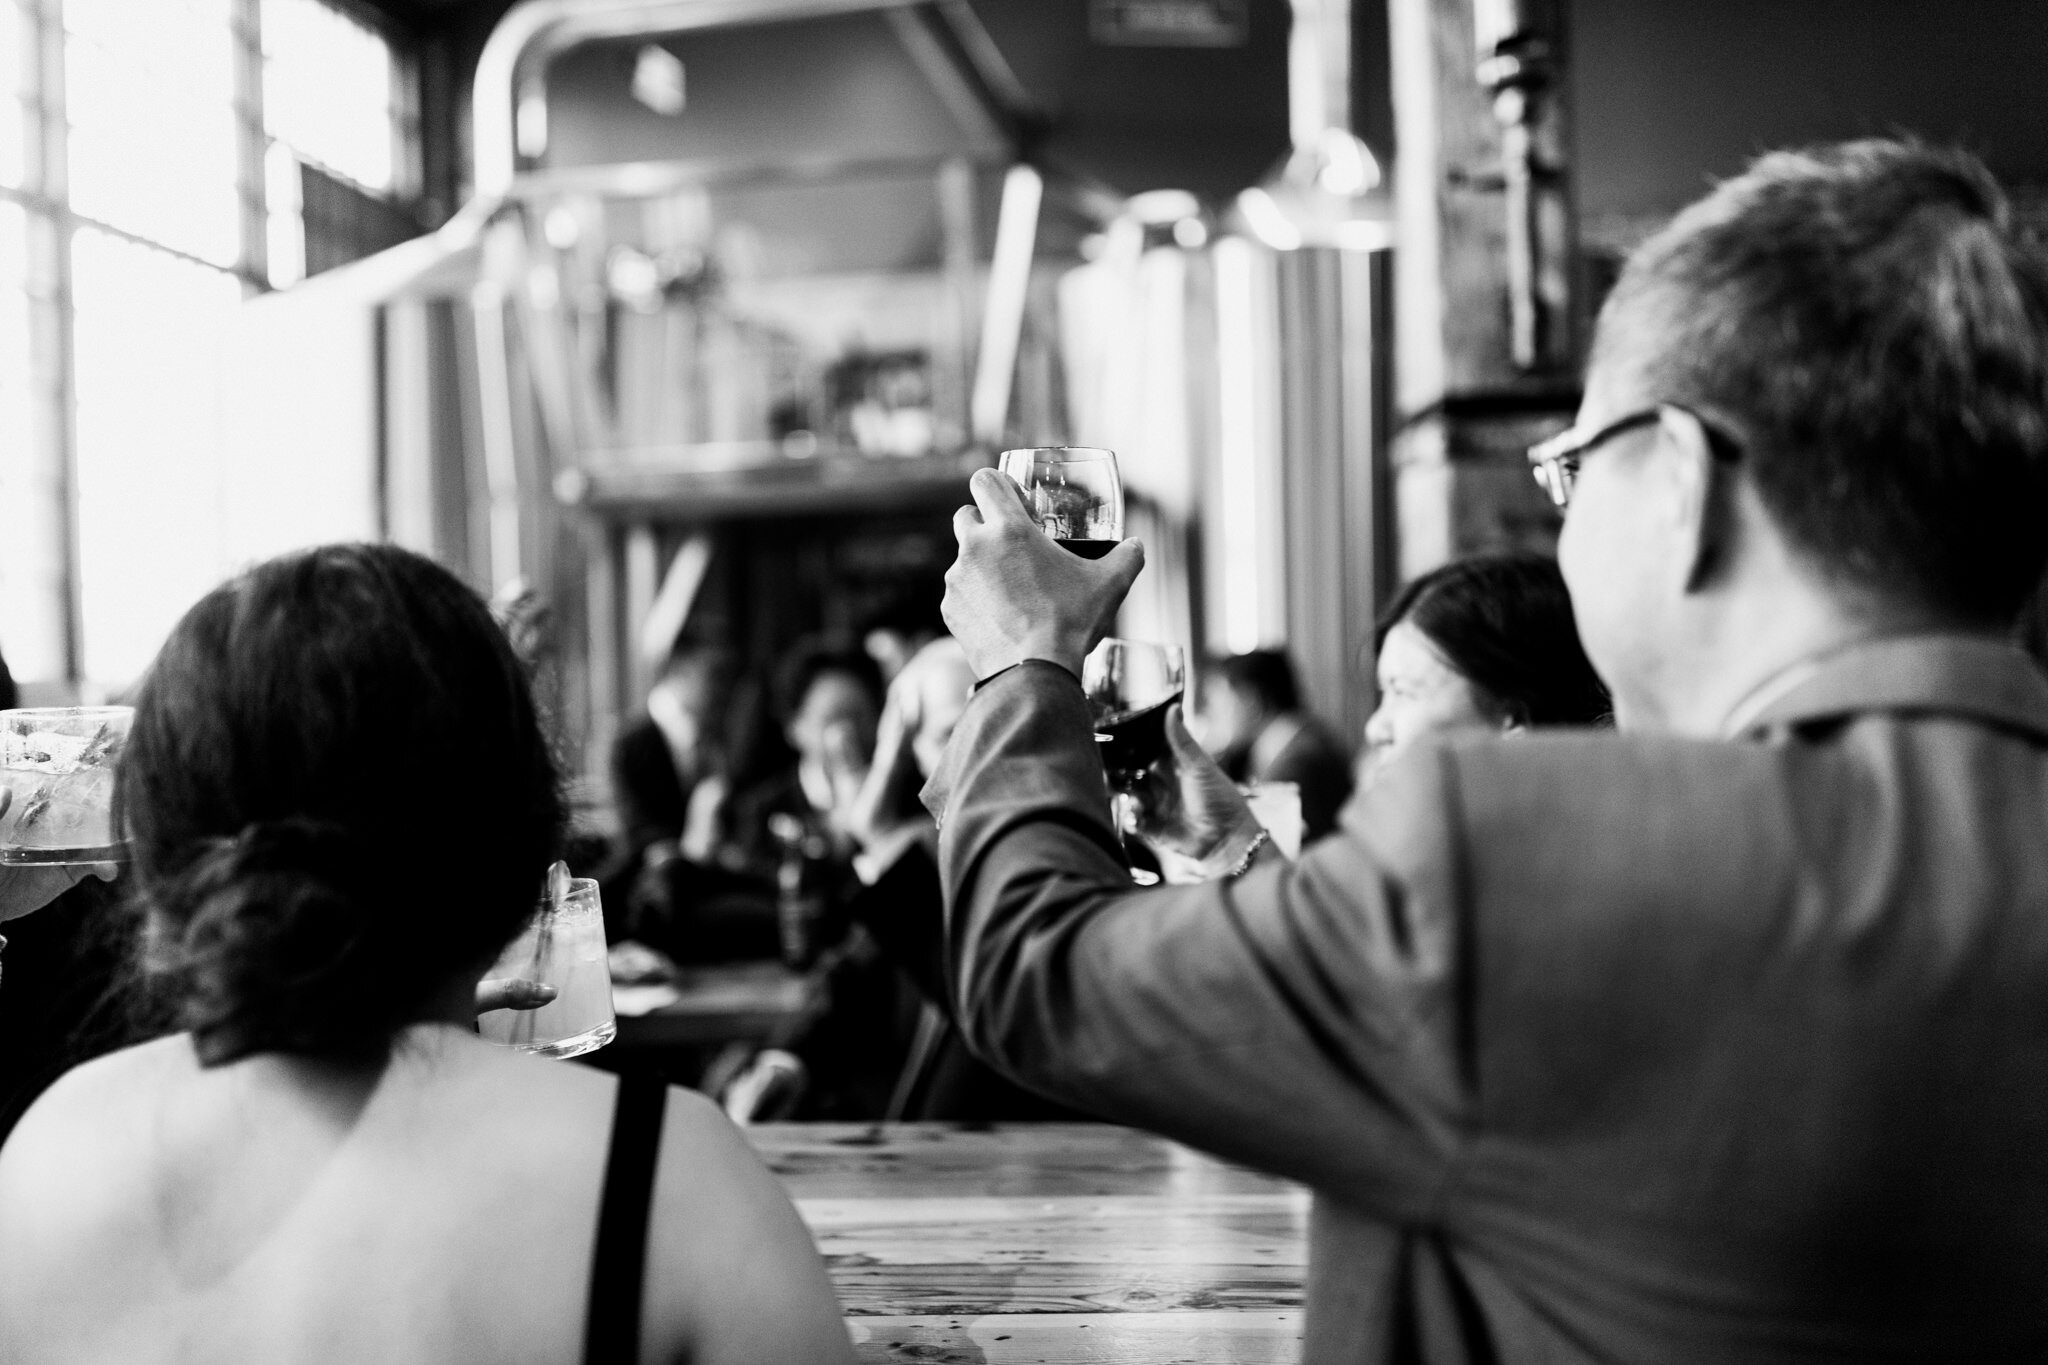 153-steamwhistle-brewery-wedding-cocktail-hour-documentary-photos-reception-decor.jpg